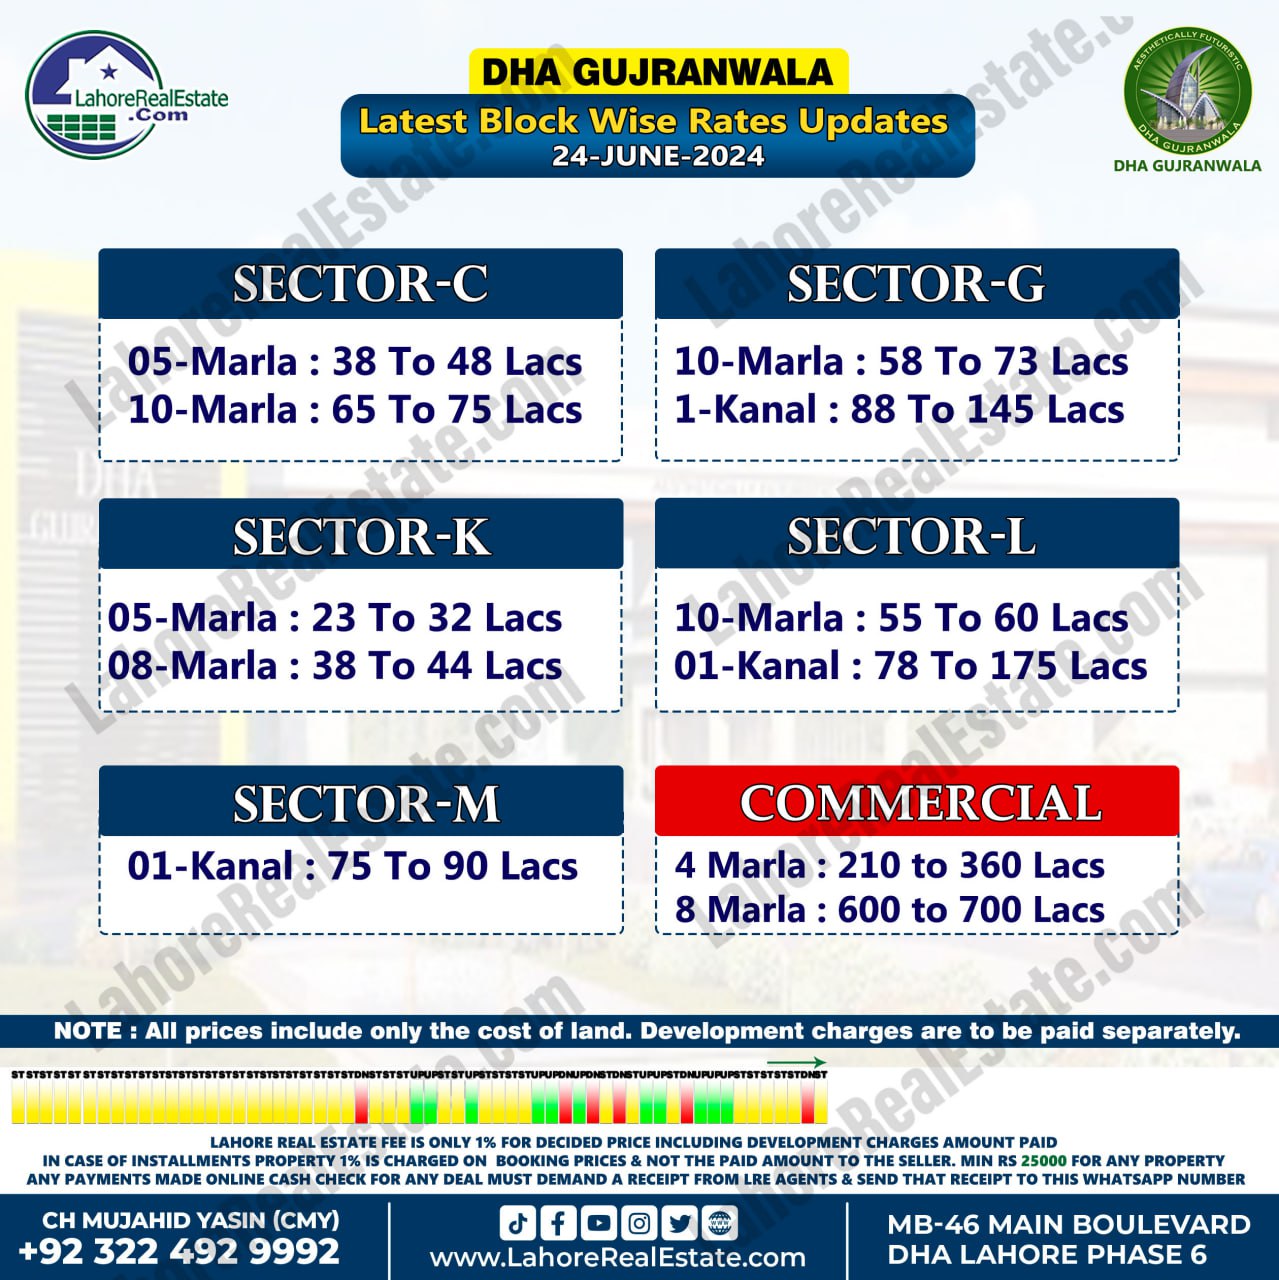 DHA Gujranwala Plot Prices Blockwise Rates June 24, 2024